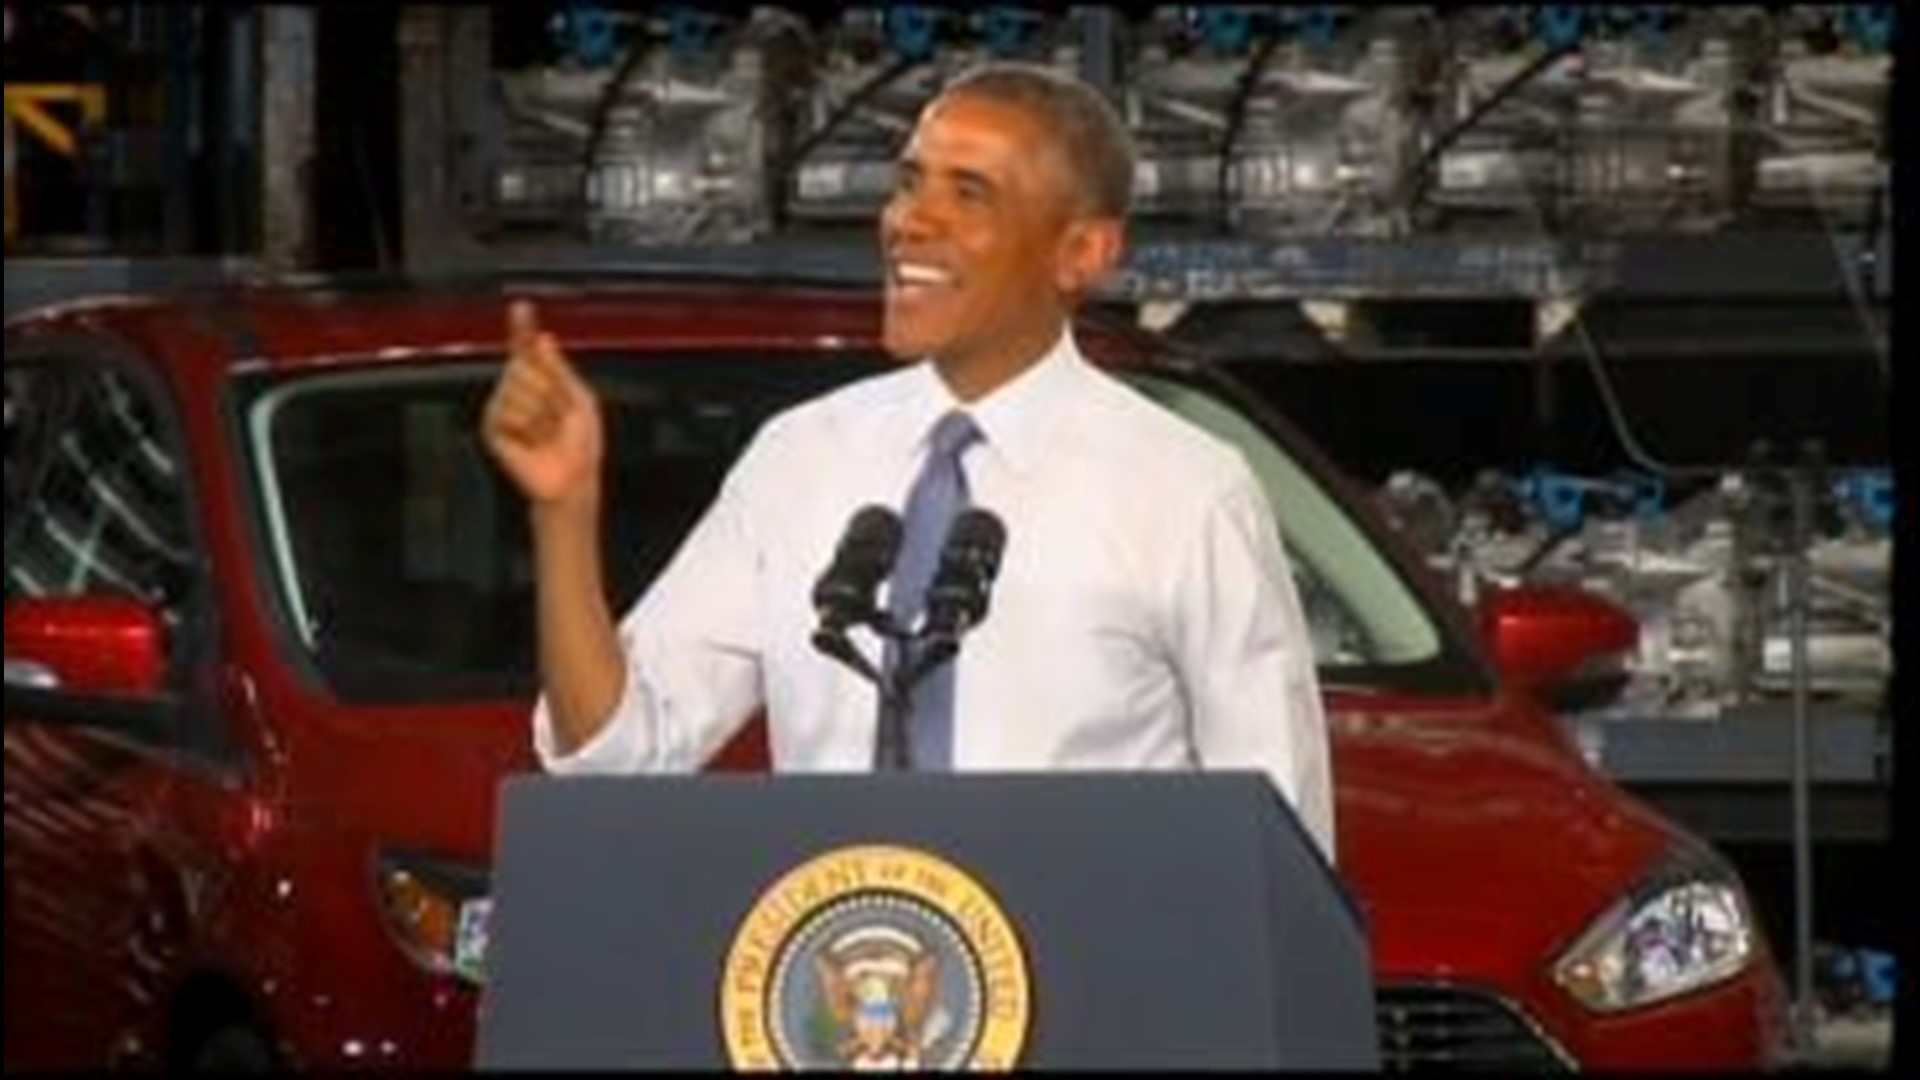 RAW: President Obama speaks at Wayne, MI Ford plant